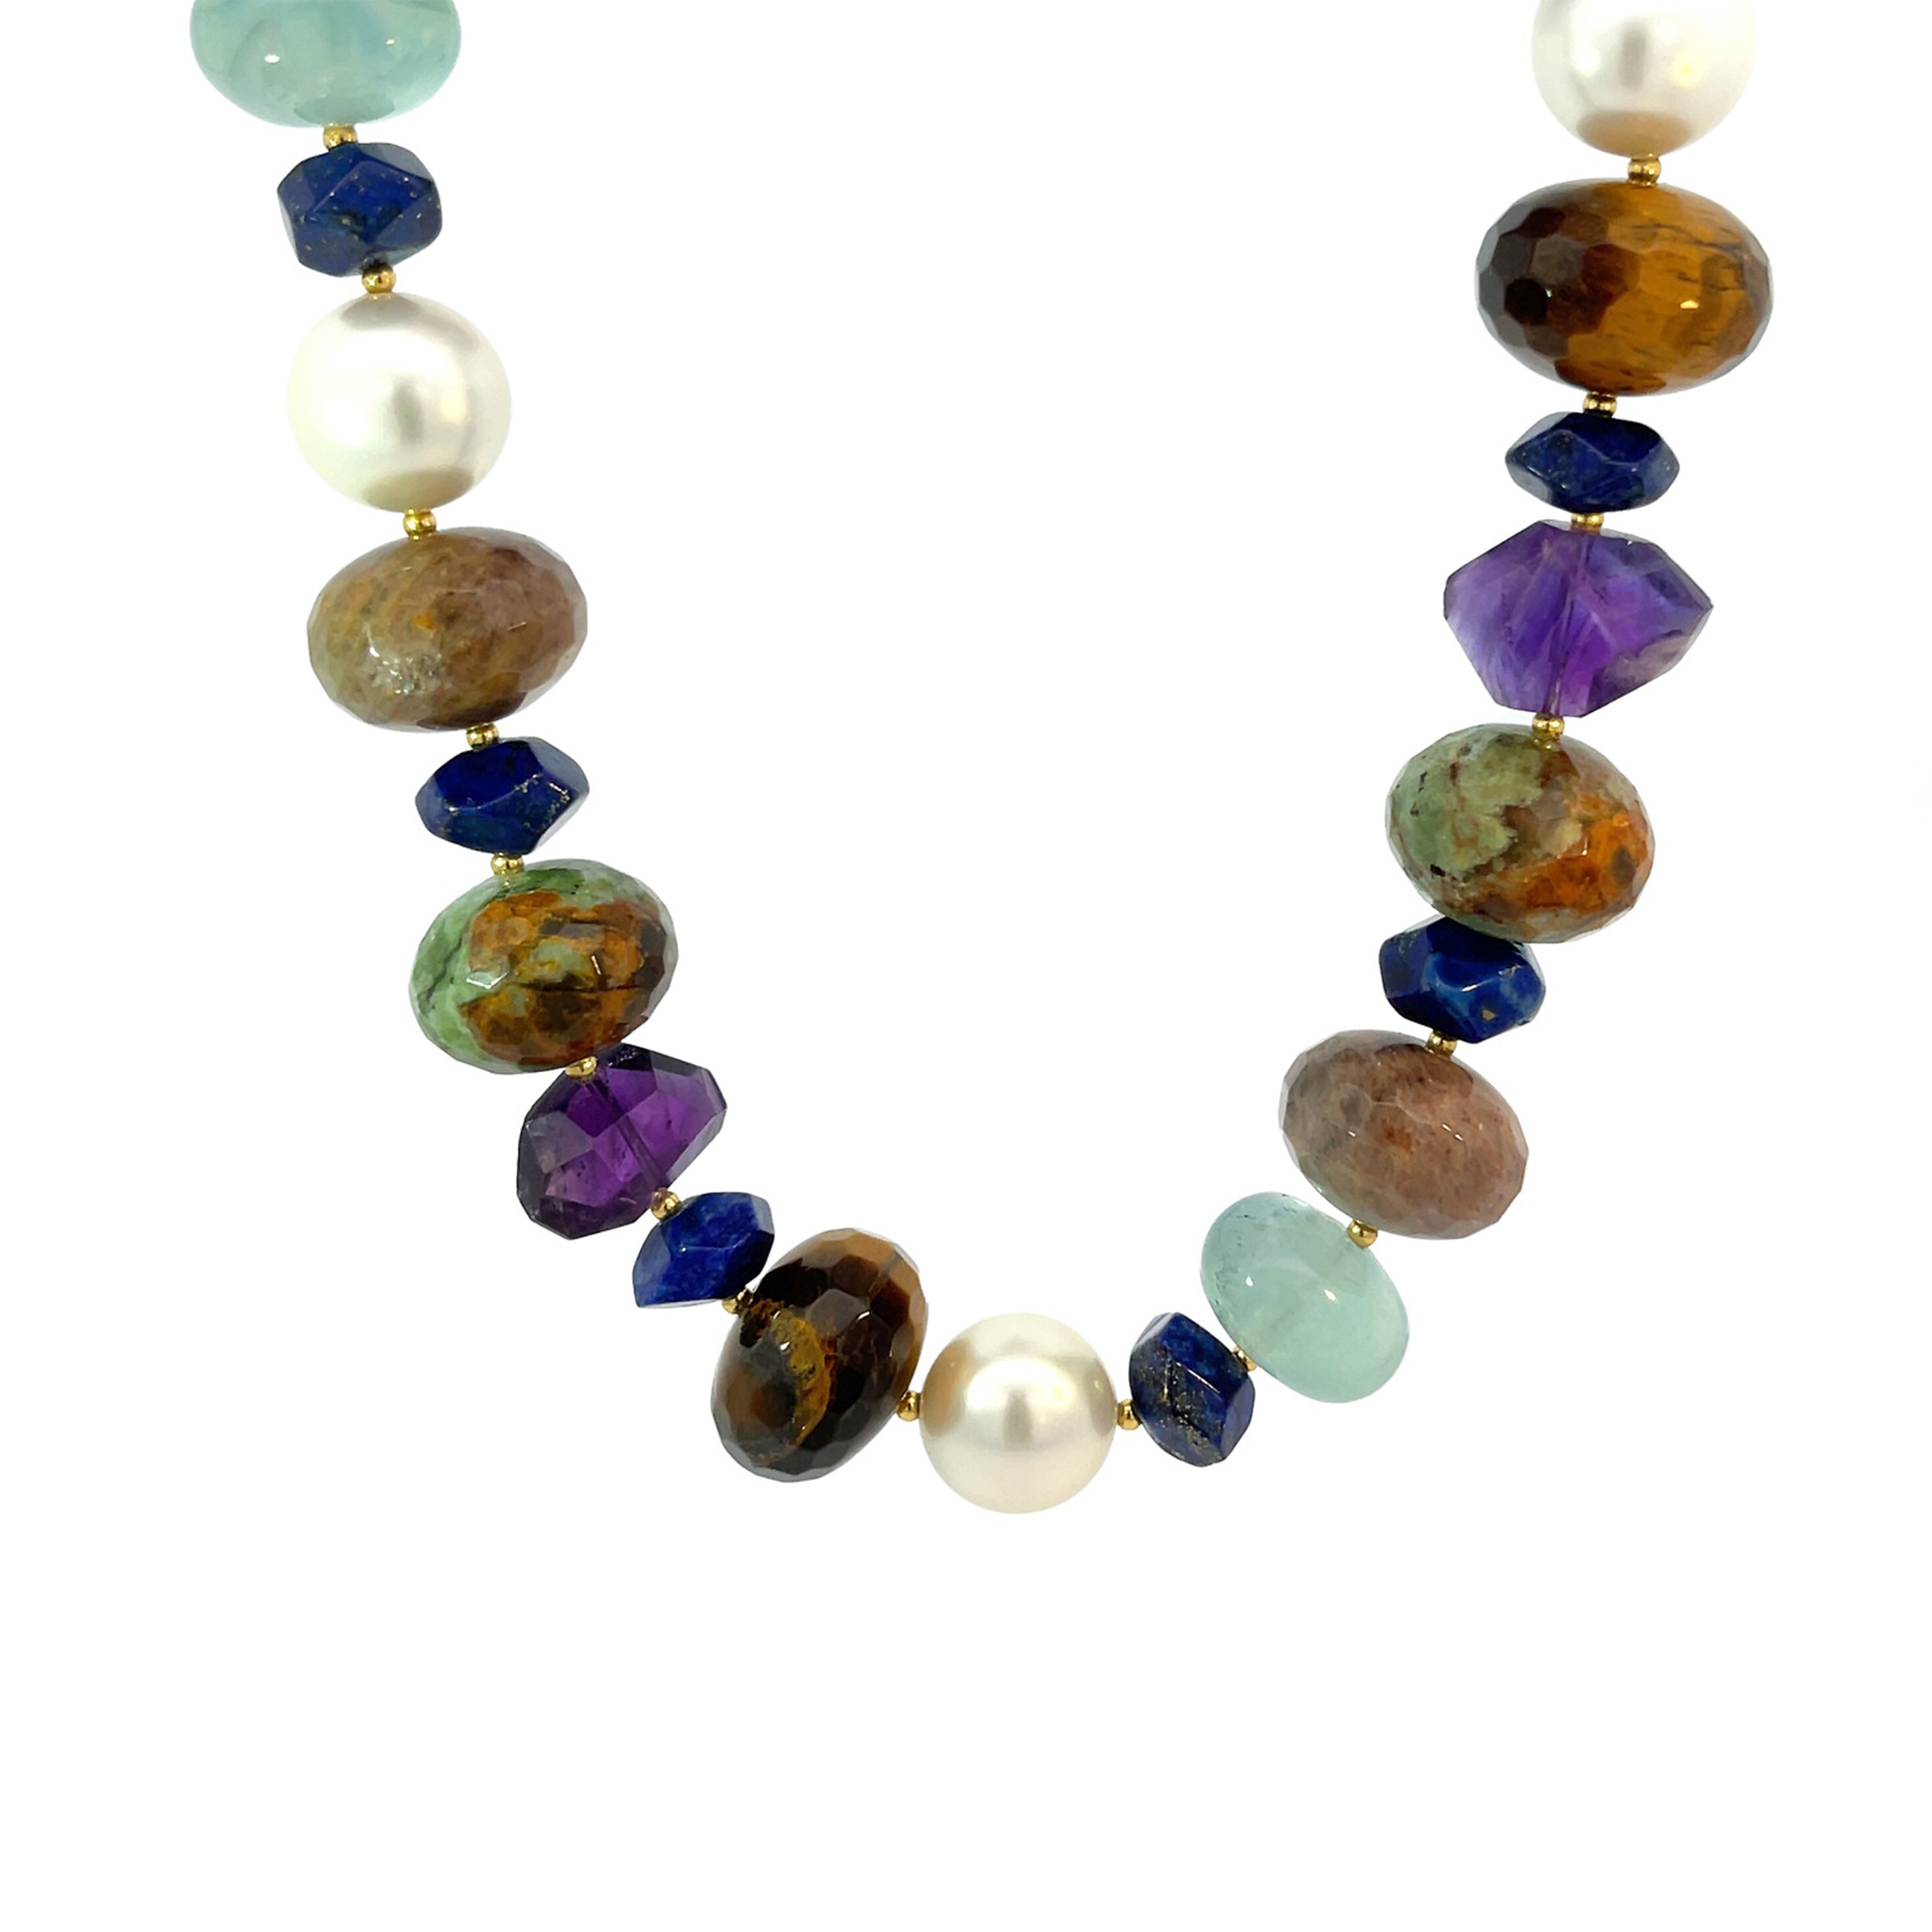  Swarovski Pearl and Gemstones Necklace by Gosia Orlowska